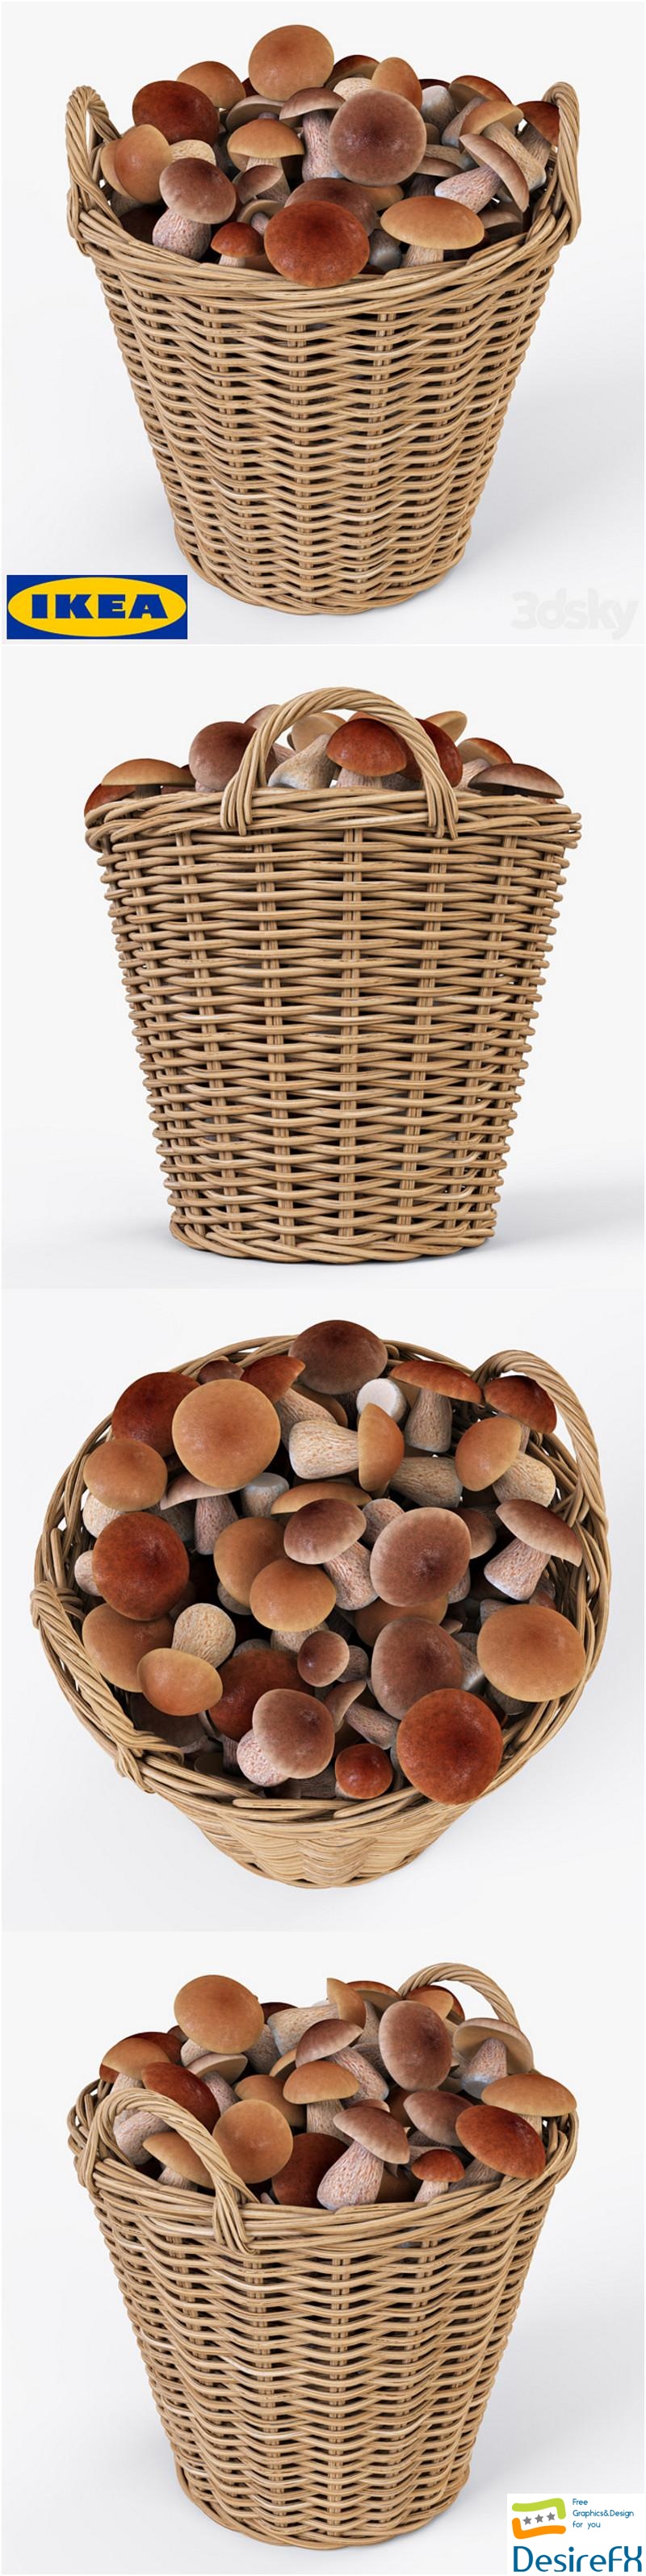 IKEA Shopping NIPPRIG with mushrooms 3D Model